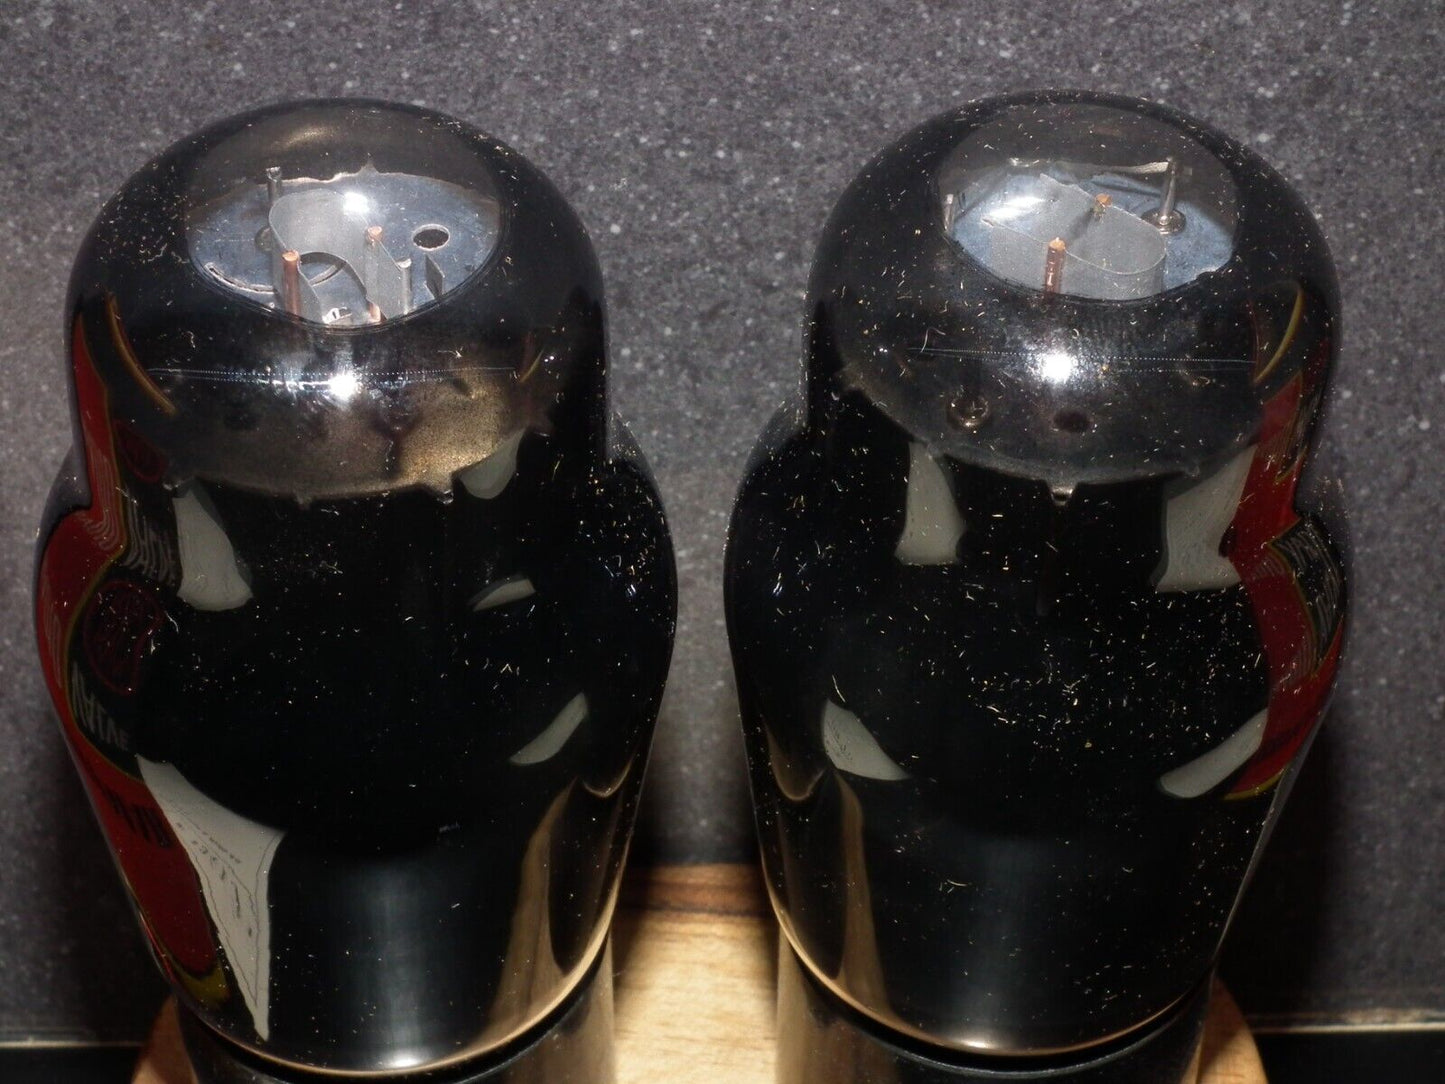 Matched pair 6L6GA BRIMAR UK Black coated glass, close serial numbers, FENDER